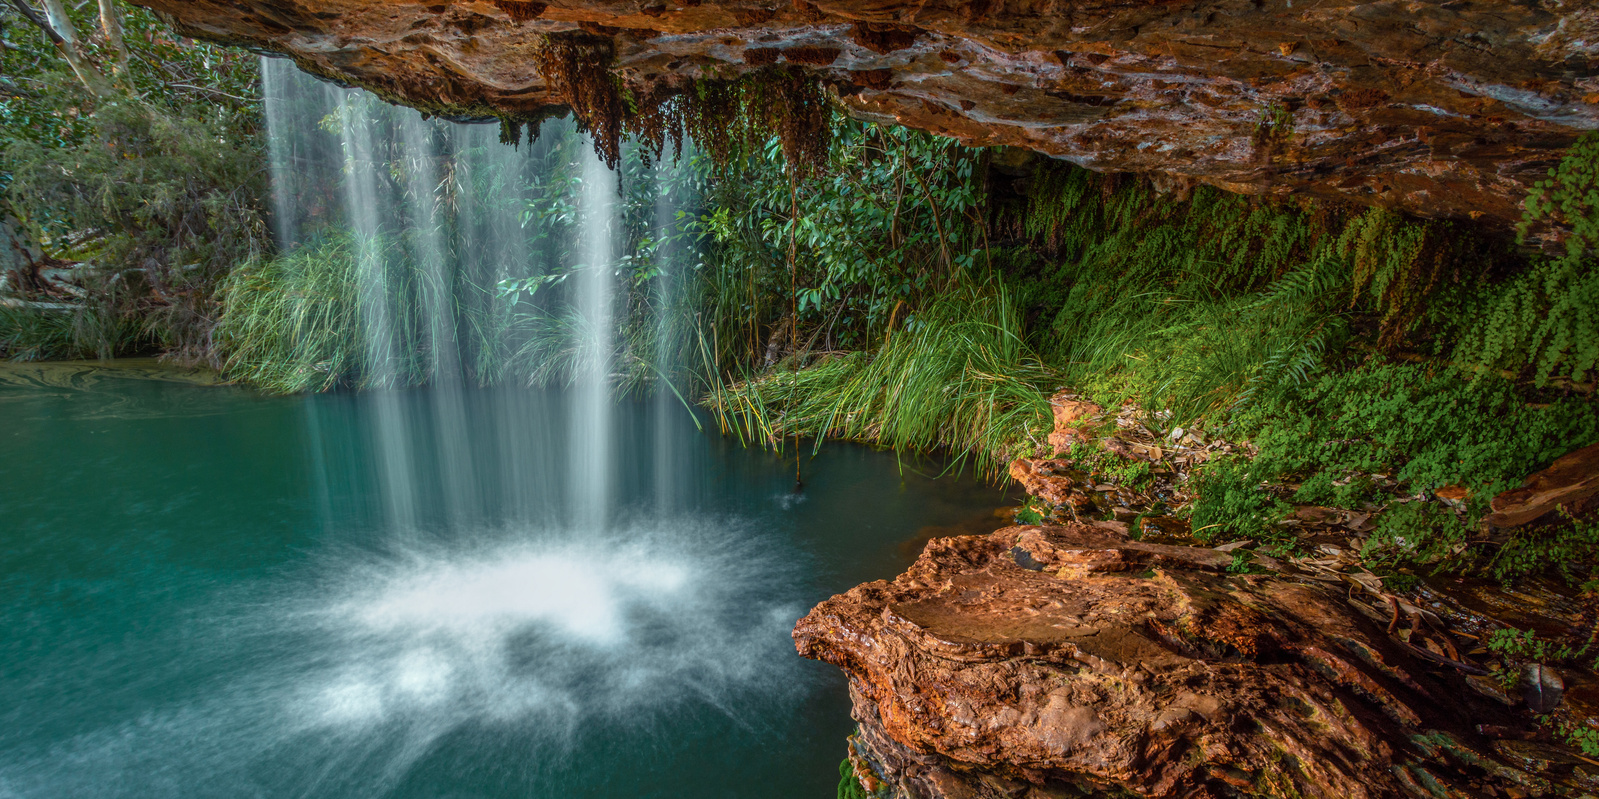 The Fern Pool waterfall at Karijini National Park.